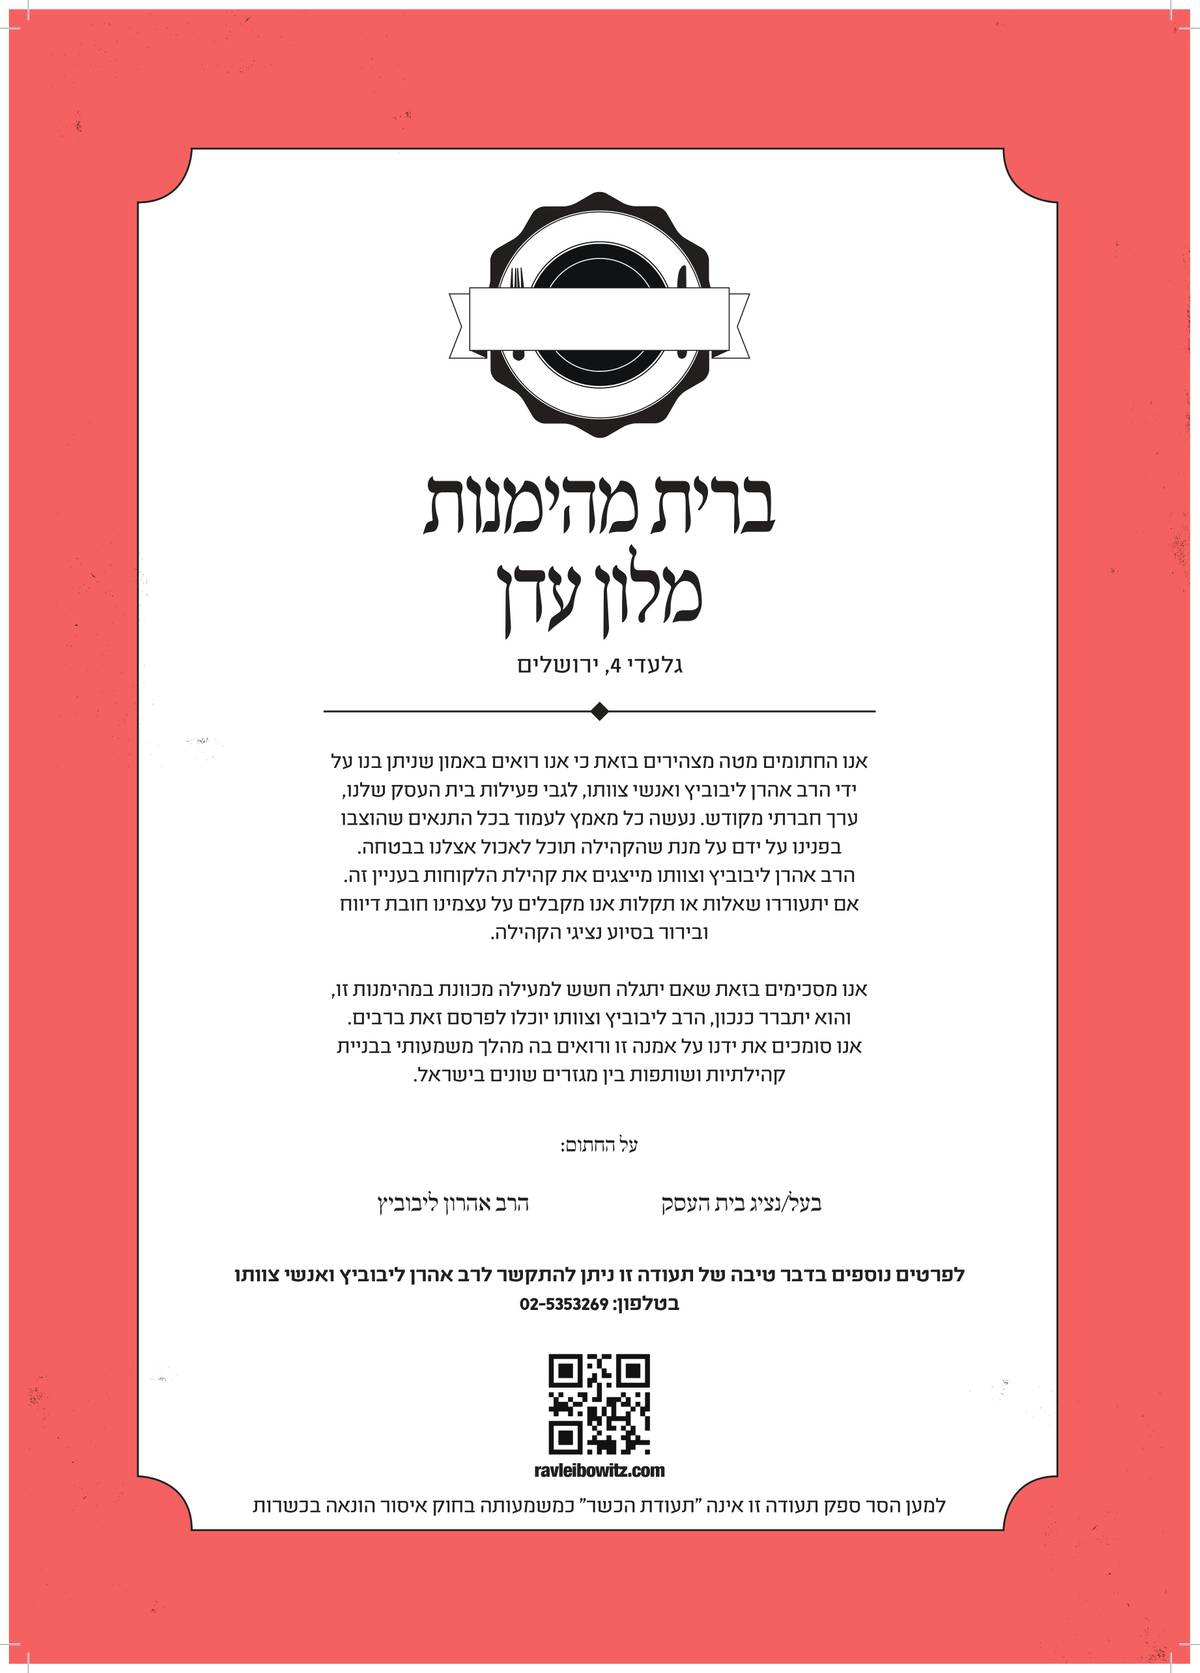 Hashgacha Pratit’s new kosher certification. (Image courtesy of Hashgacha Pratit)